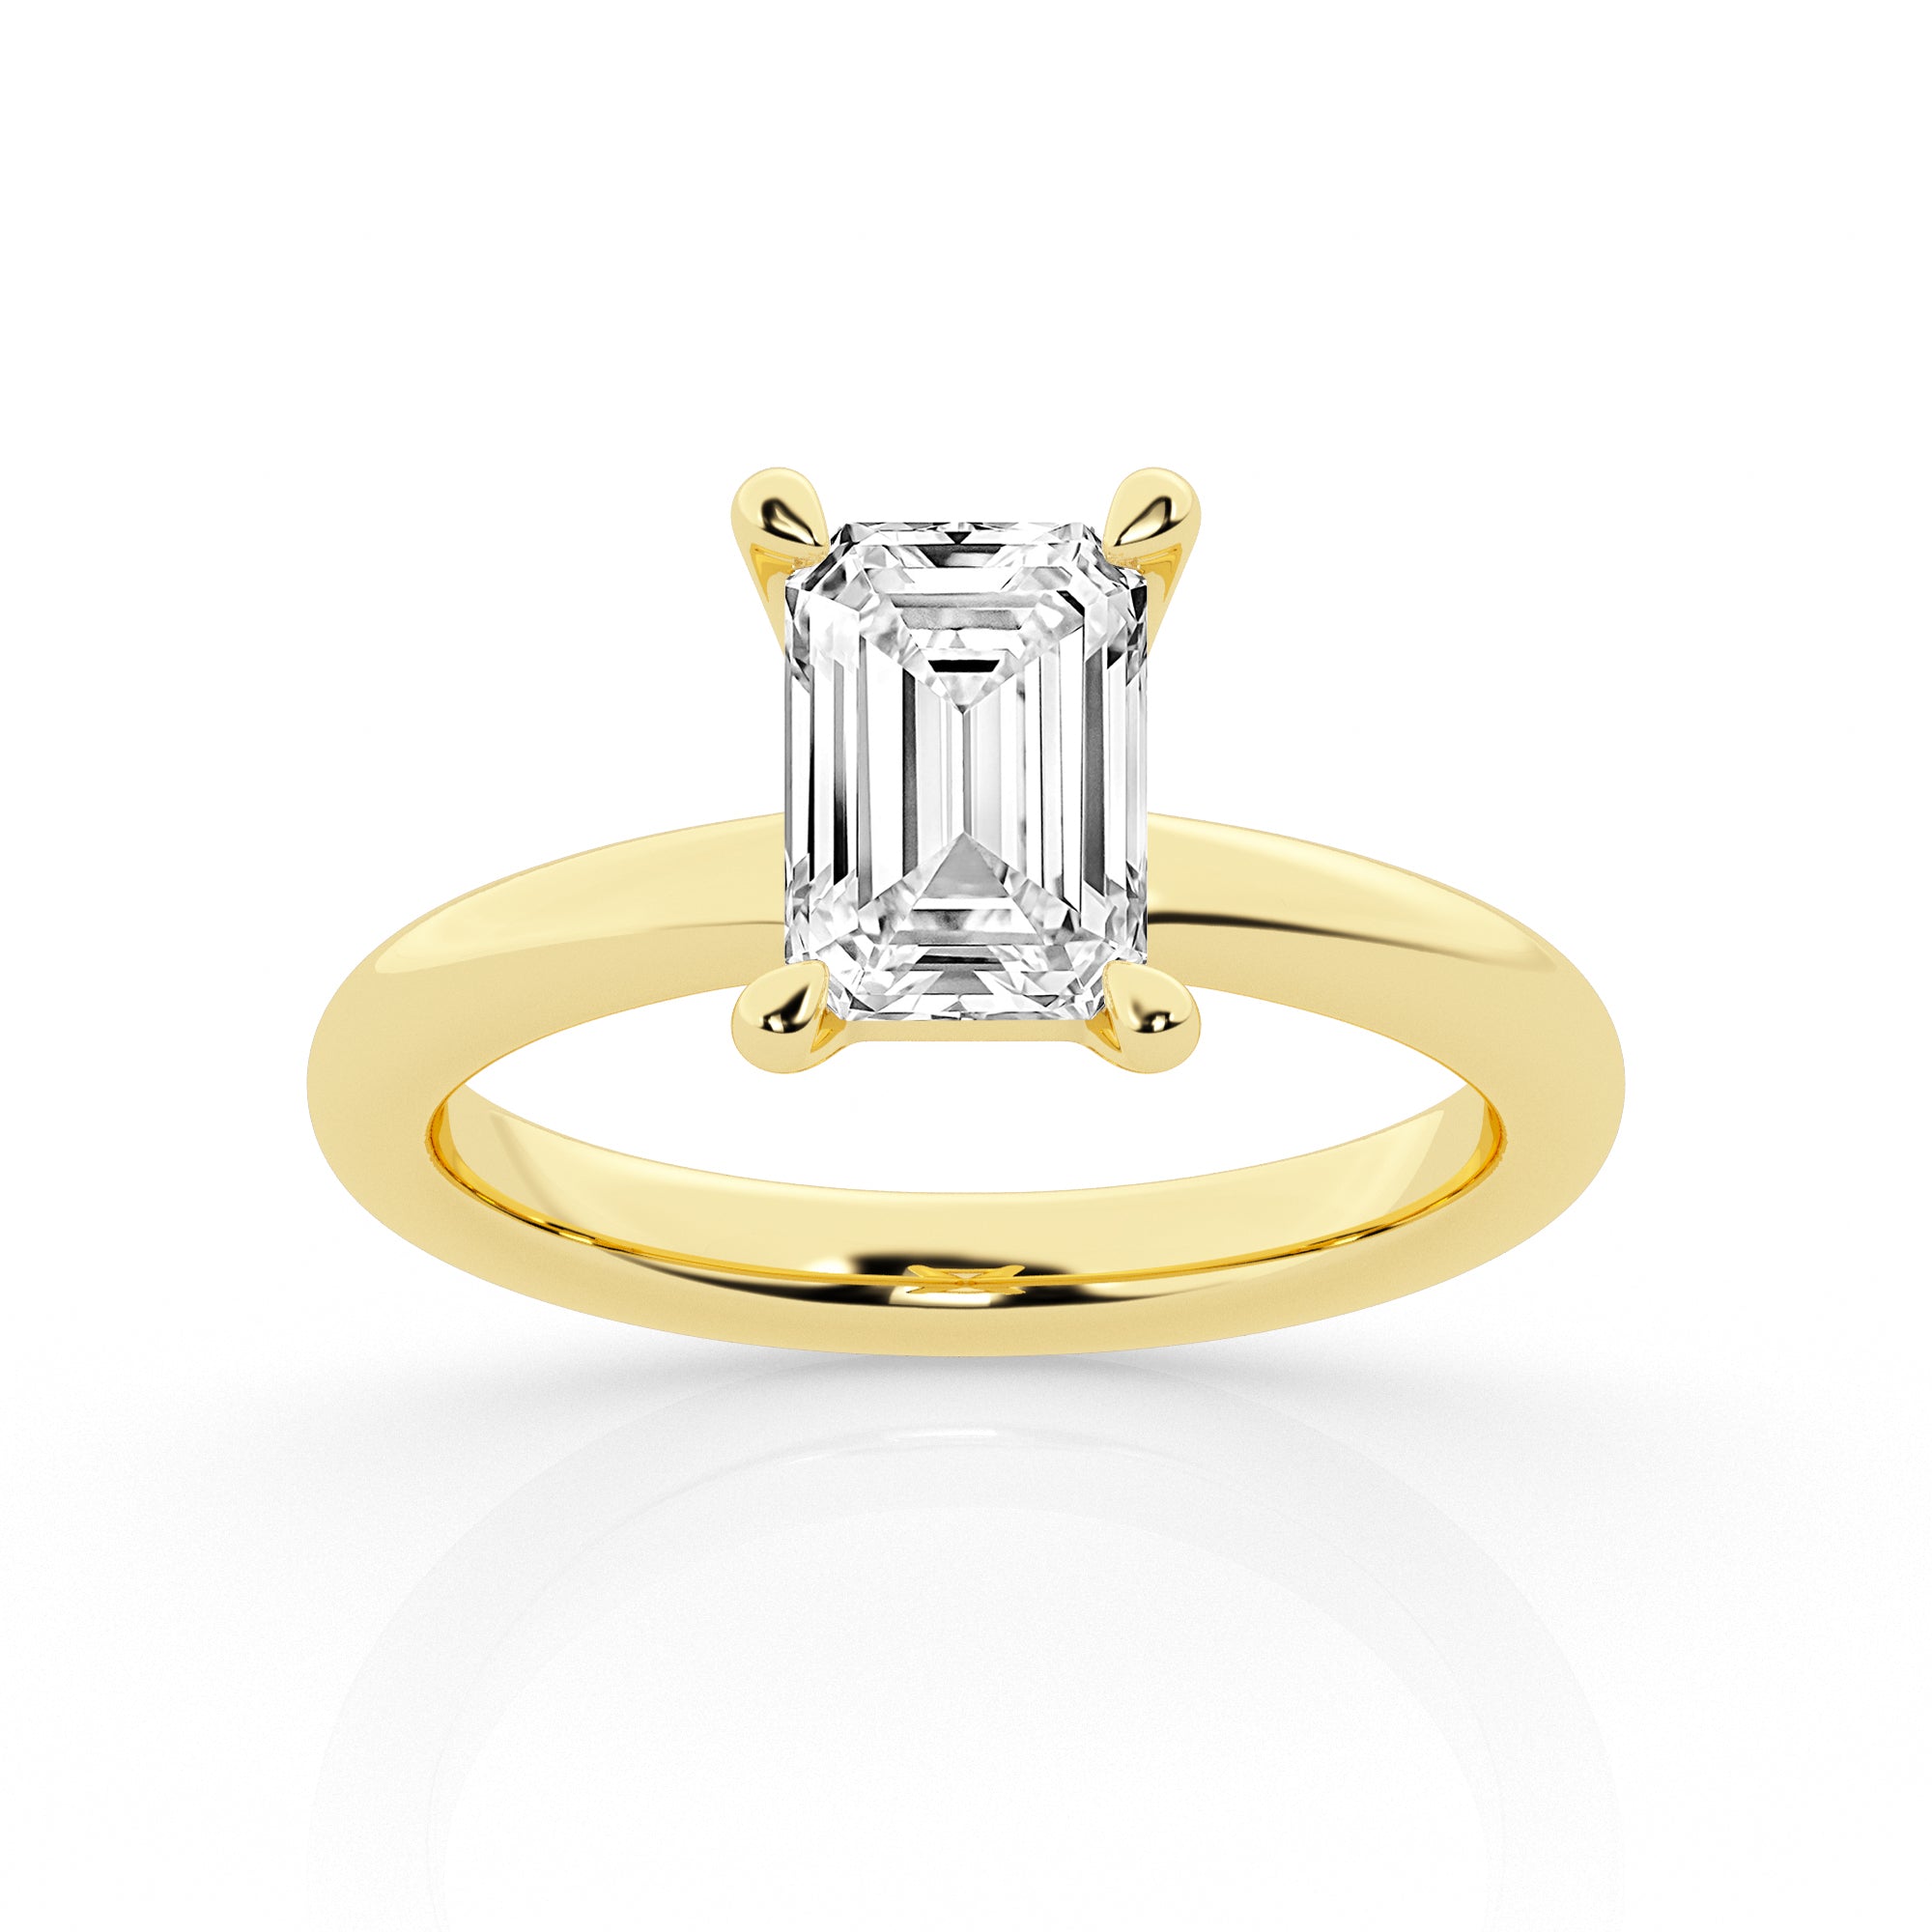 2 carat Emerald Solitaire Diamond Engagement Ring